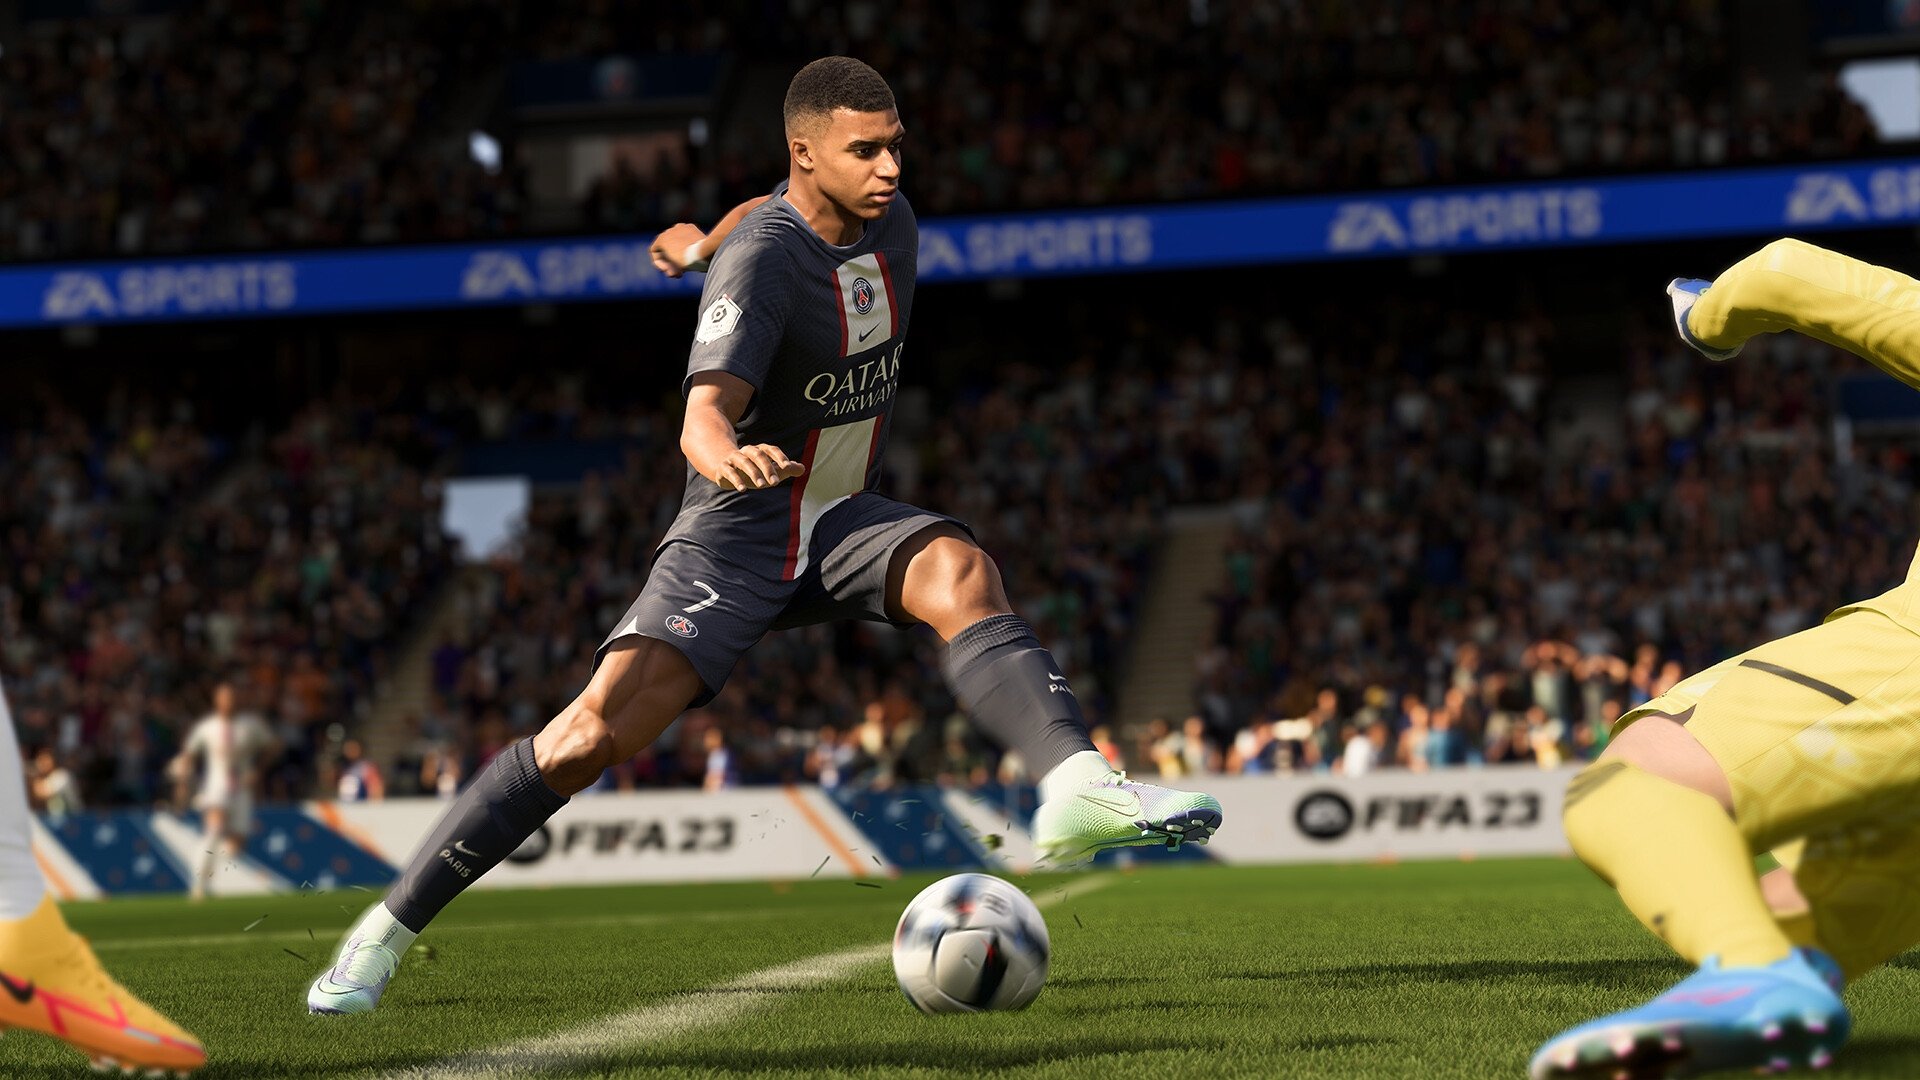 Download EA SPORTS FIFA 23 - Baixar para PC Grátis